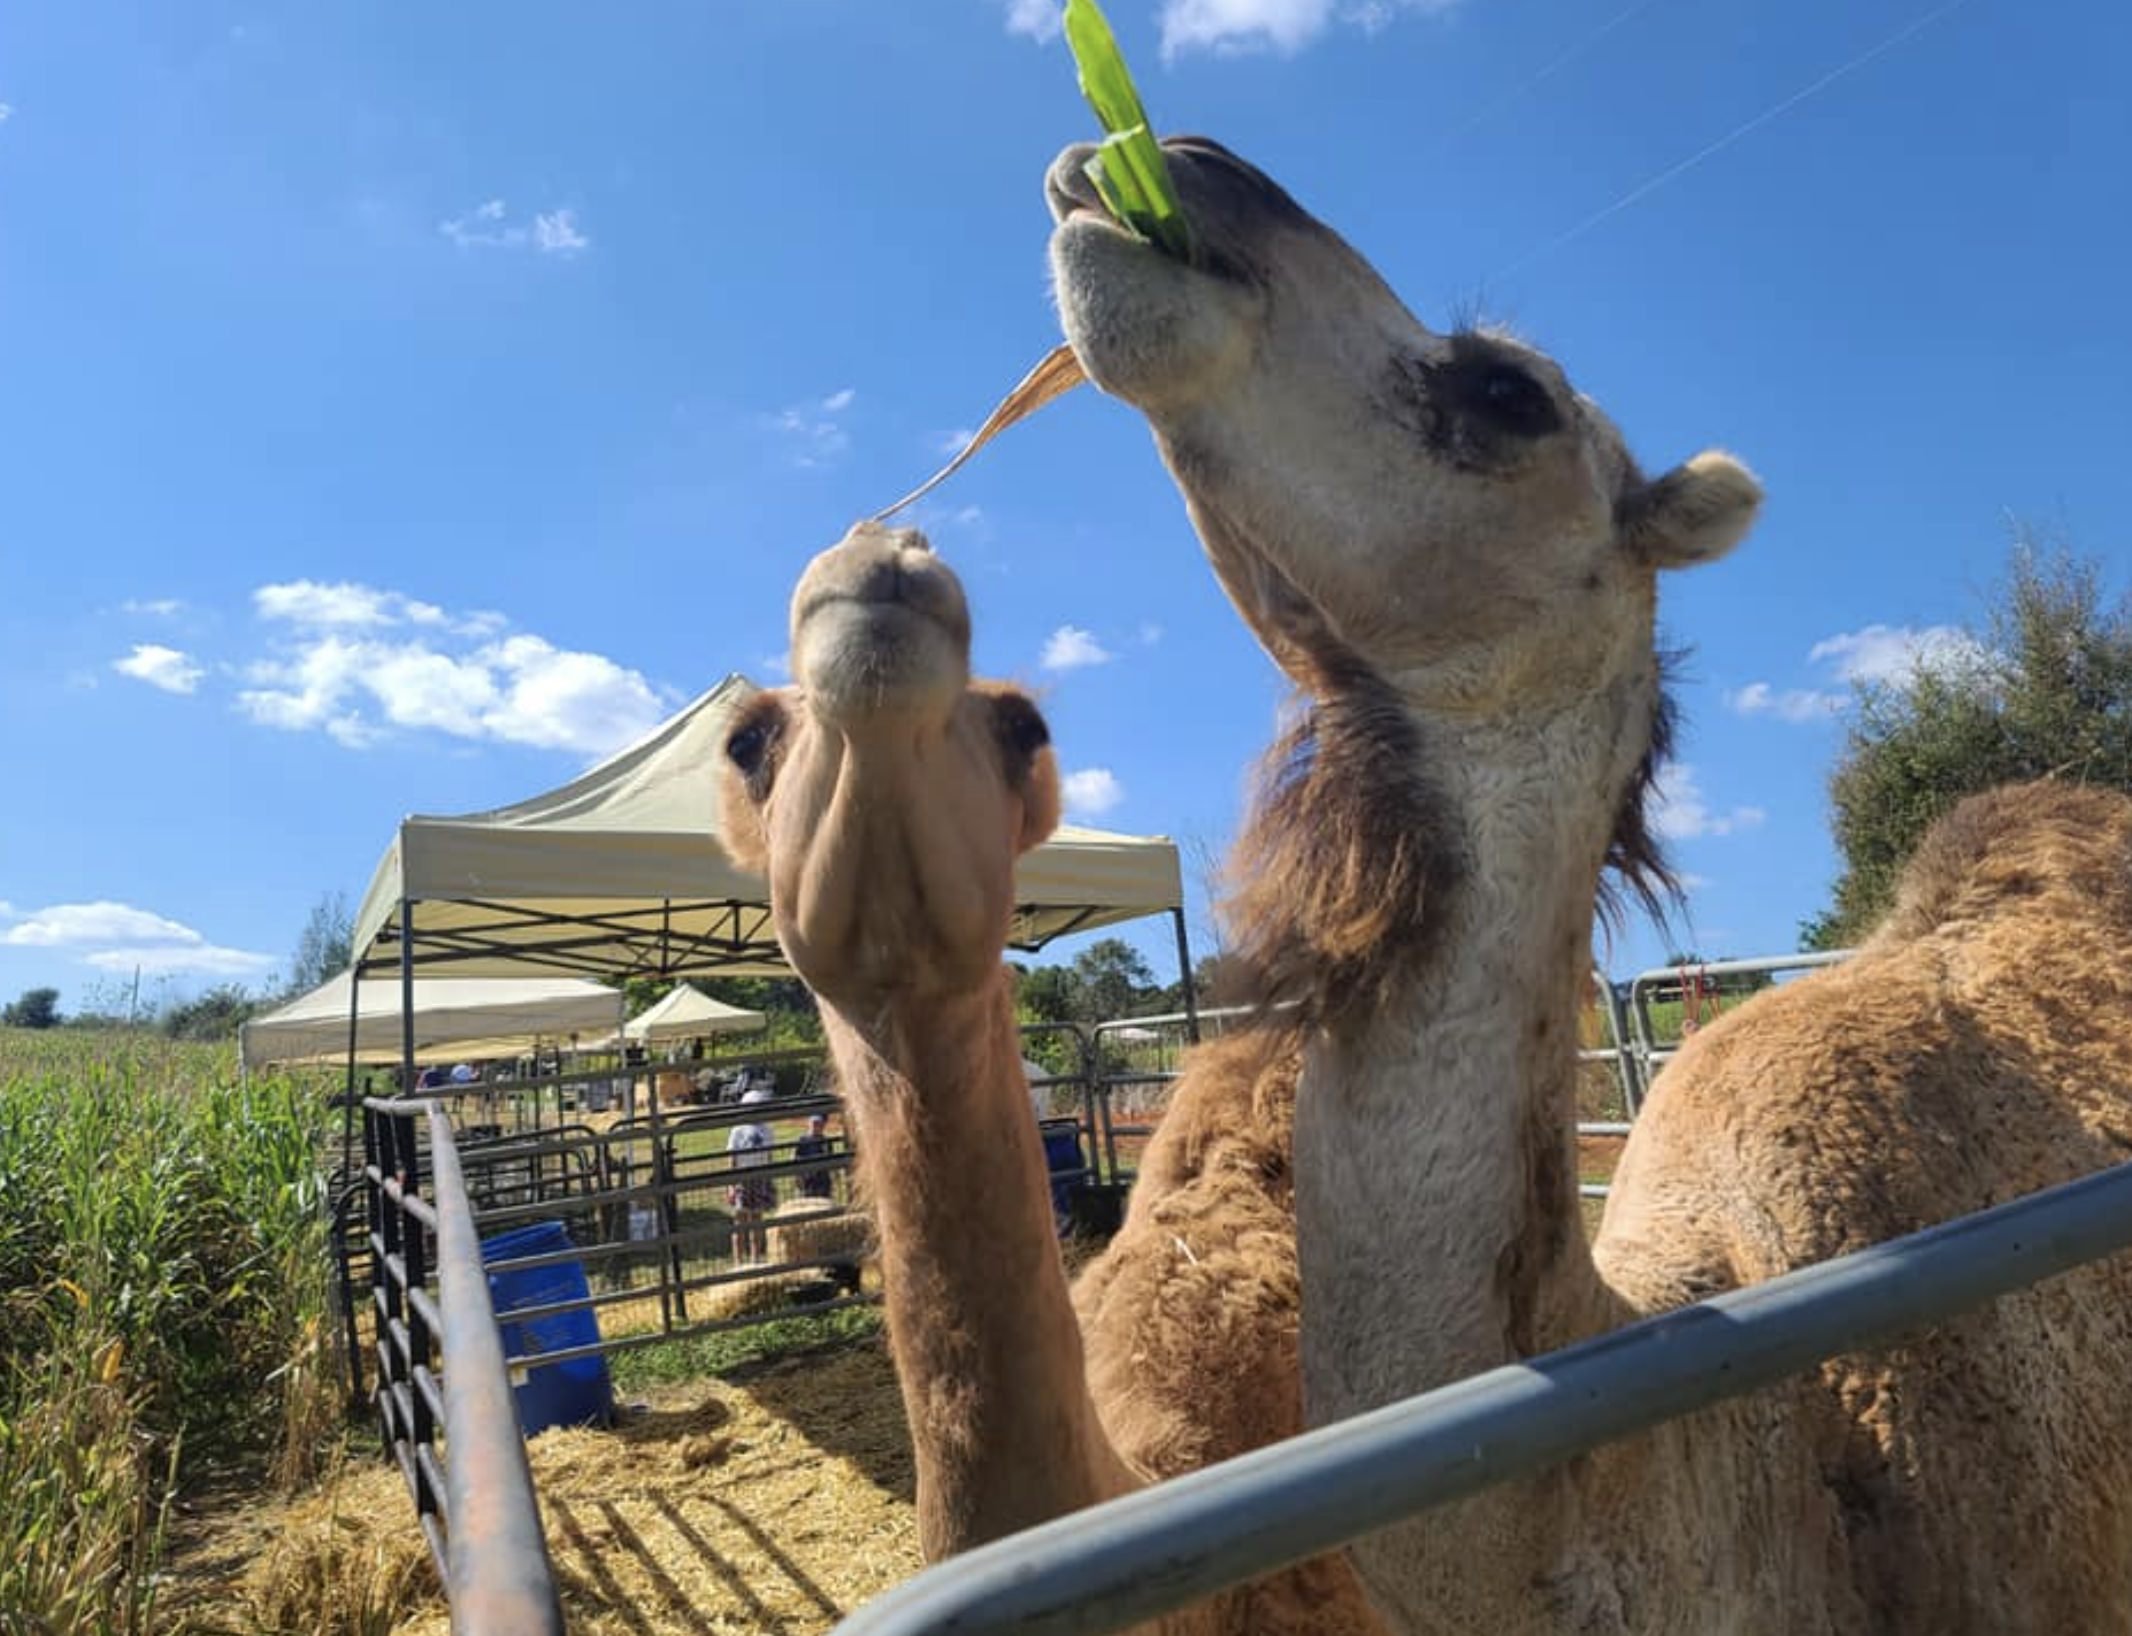 Camel-petting-zoo.jpg